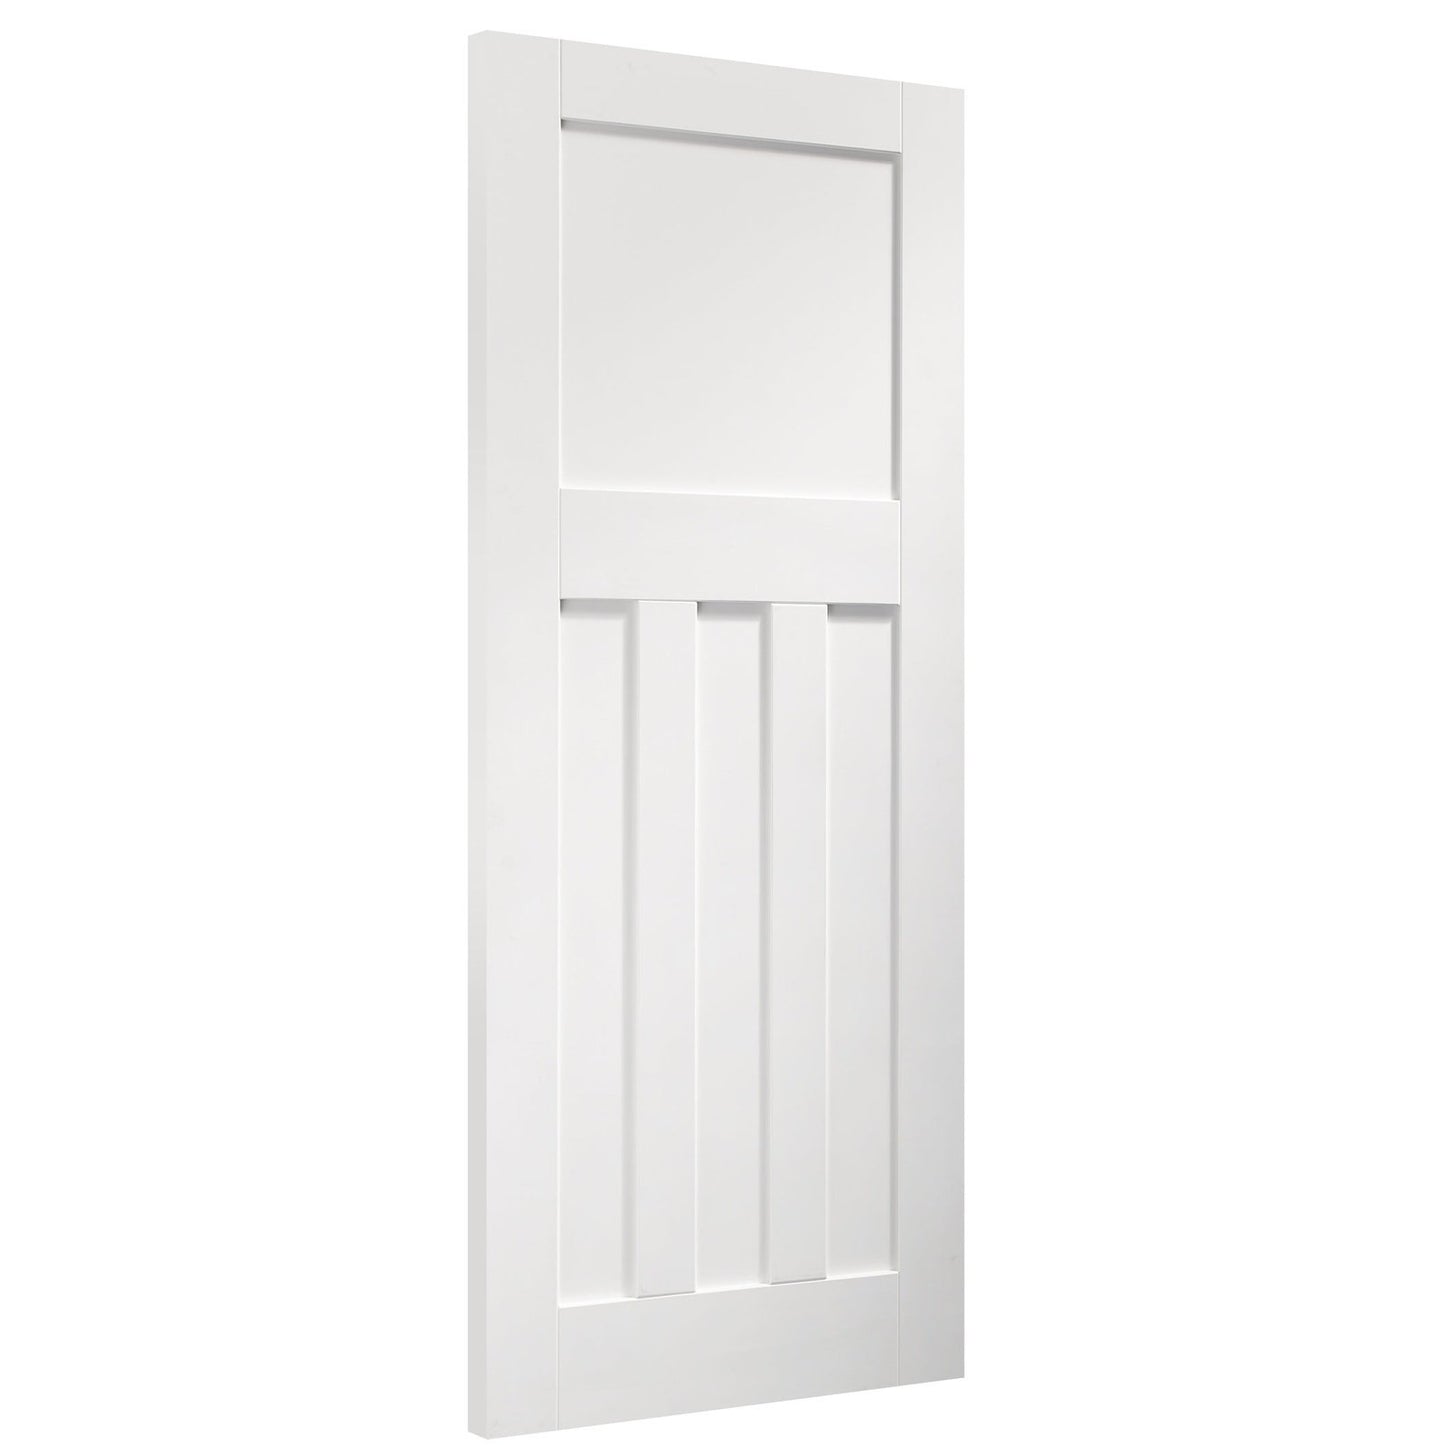 Internal White Primed DX Fire Door